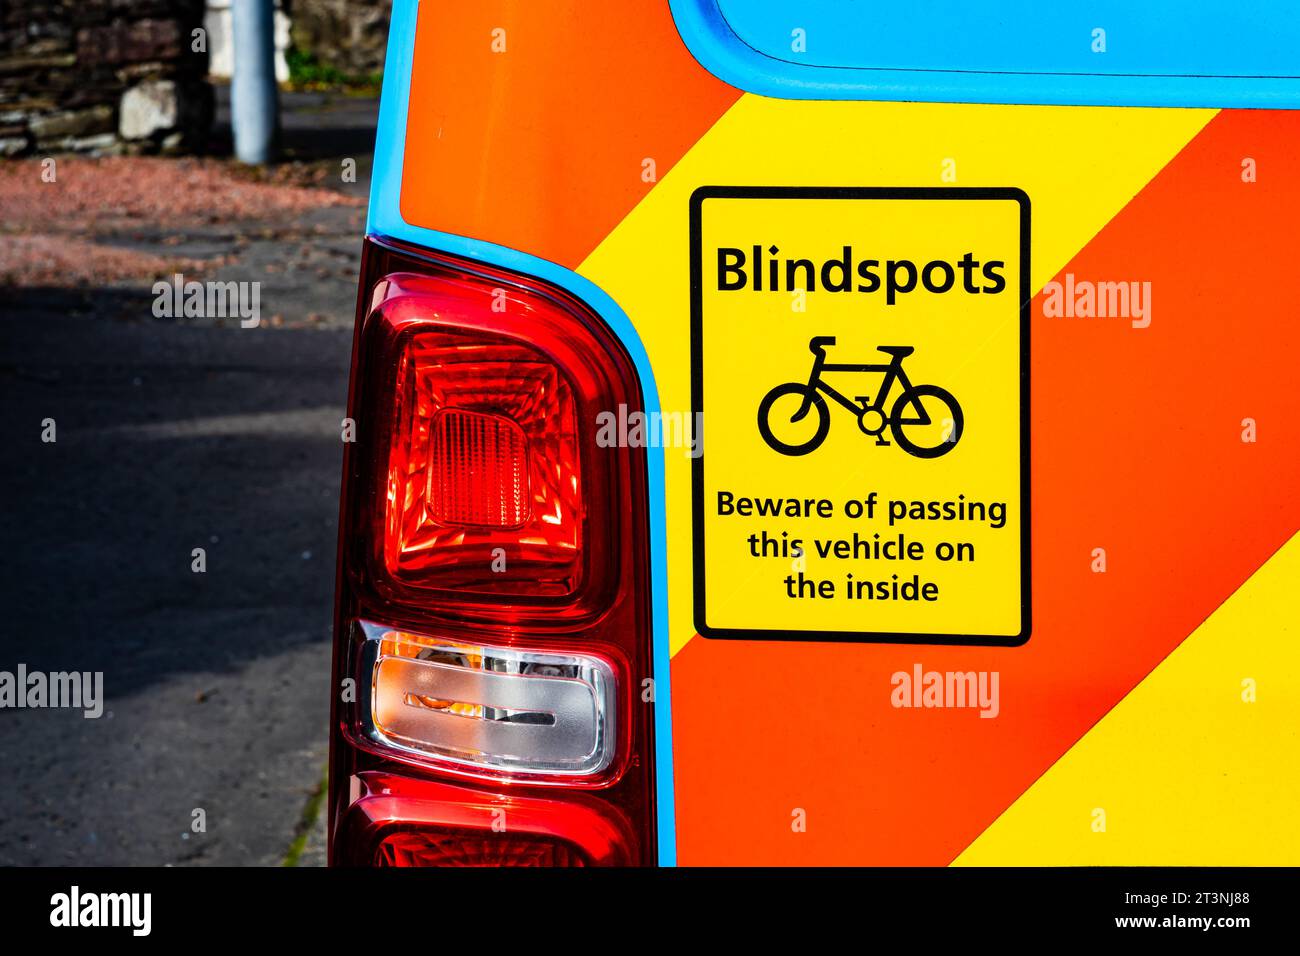 Blindspot -Fotos und -Bildmaterial in hoher Auflösung – Alamy